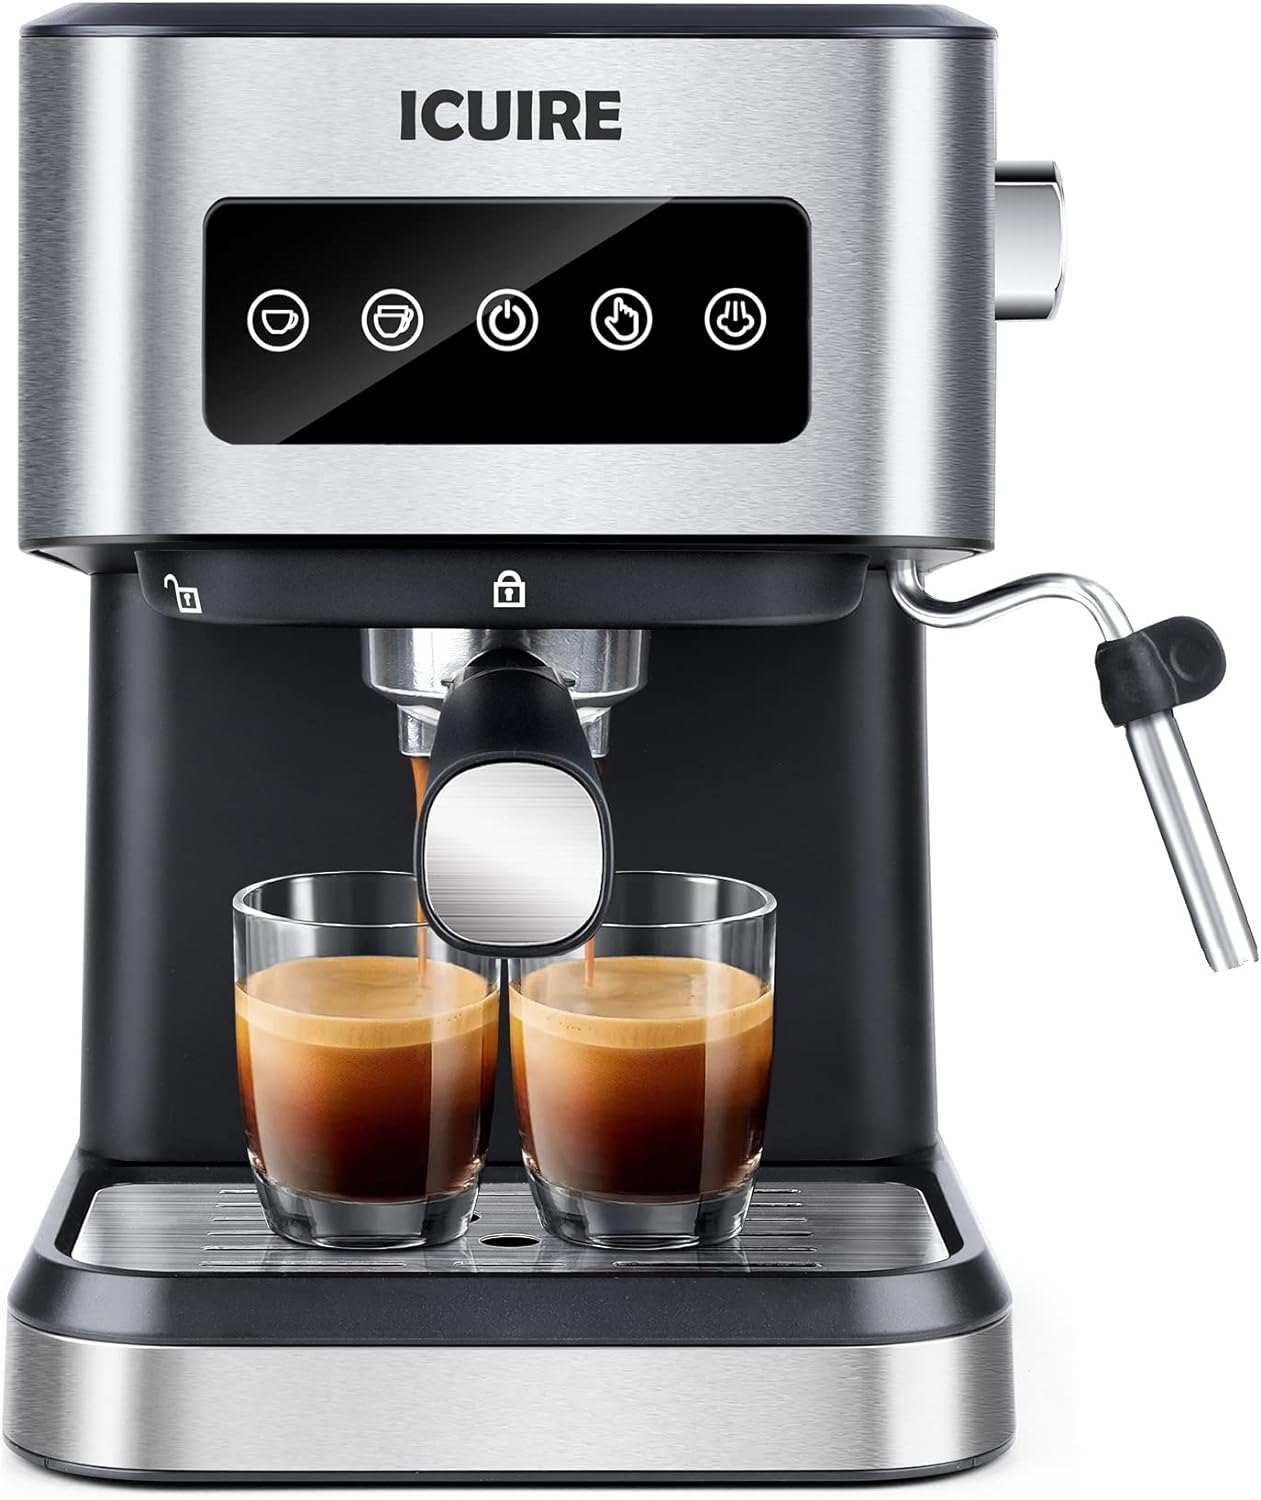 ICUIRE Espresso Machine Review